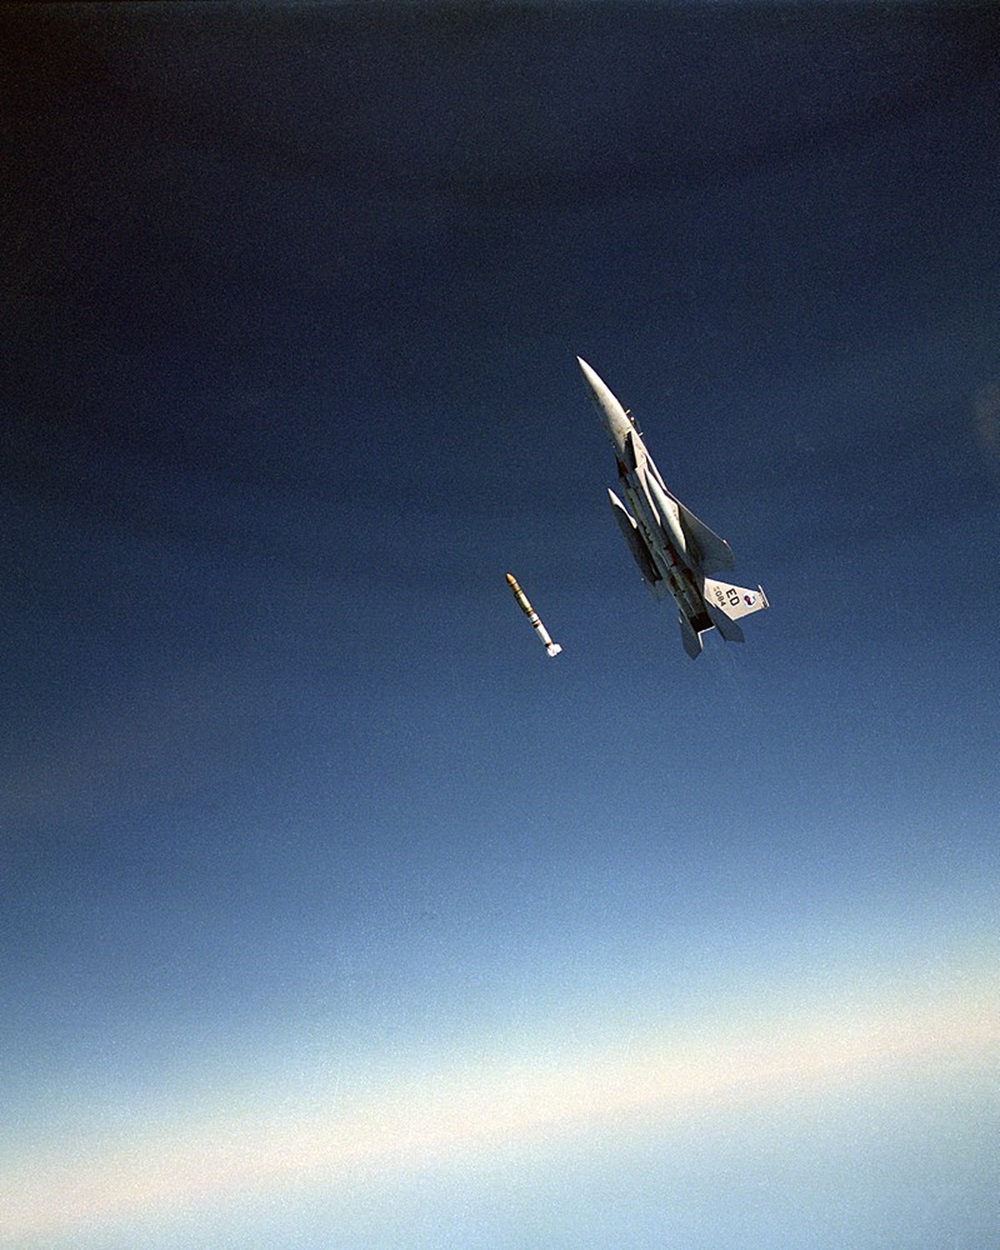 F15 lancia un missile anti satellite ASAT durante un test